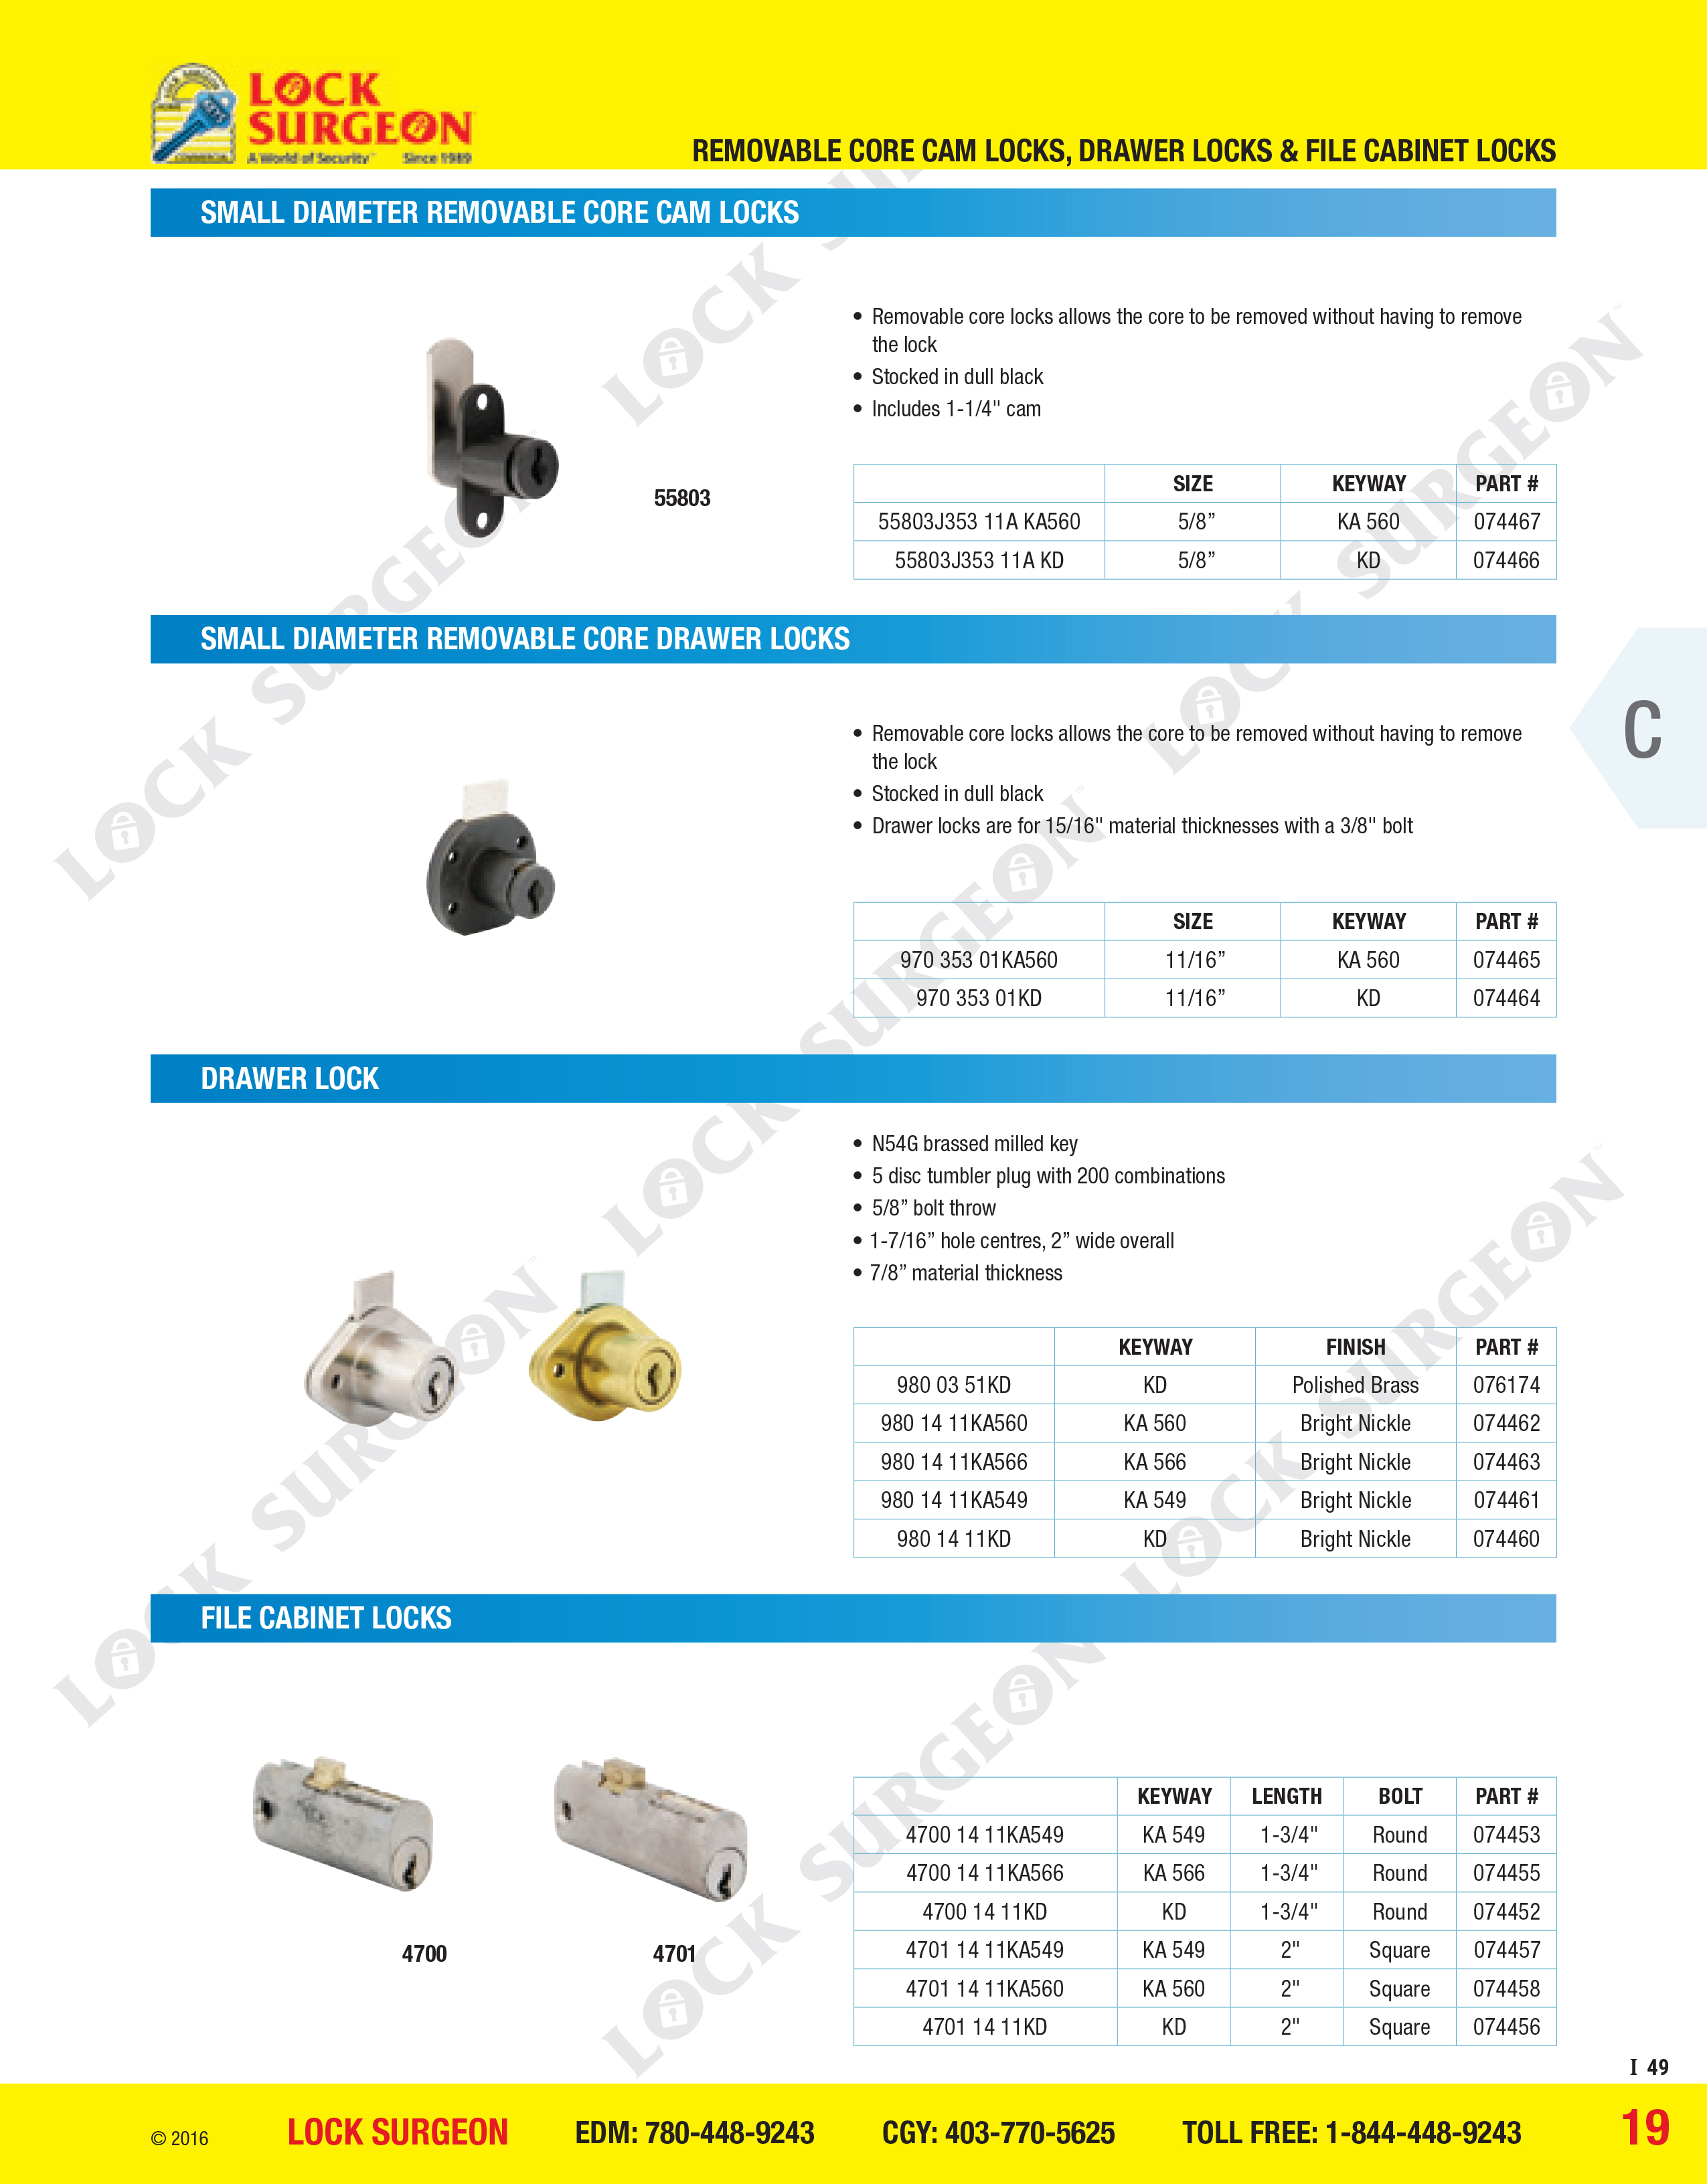 Small diameter removable core cam locks & core drawer locks, drawer lock & file cabinet locks.